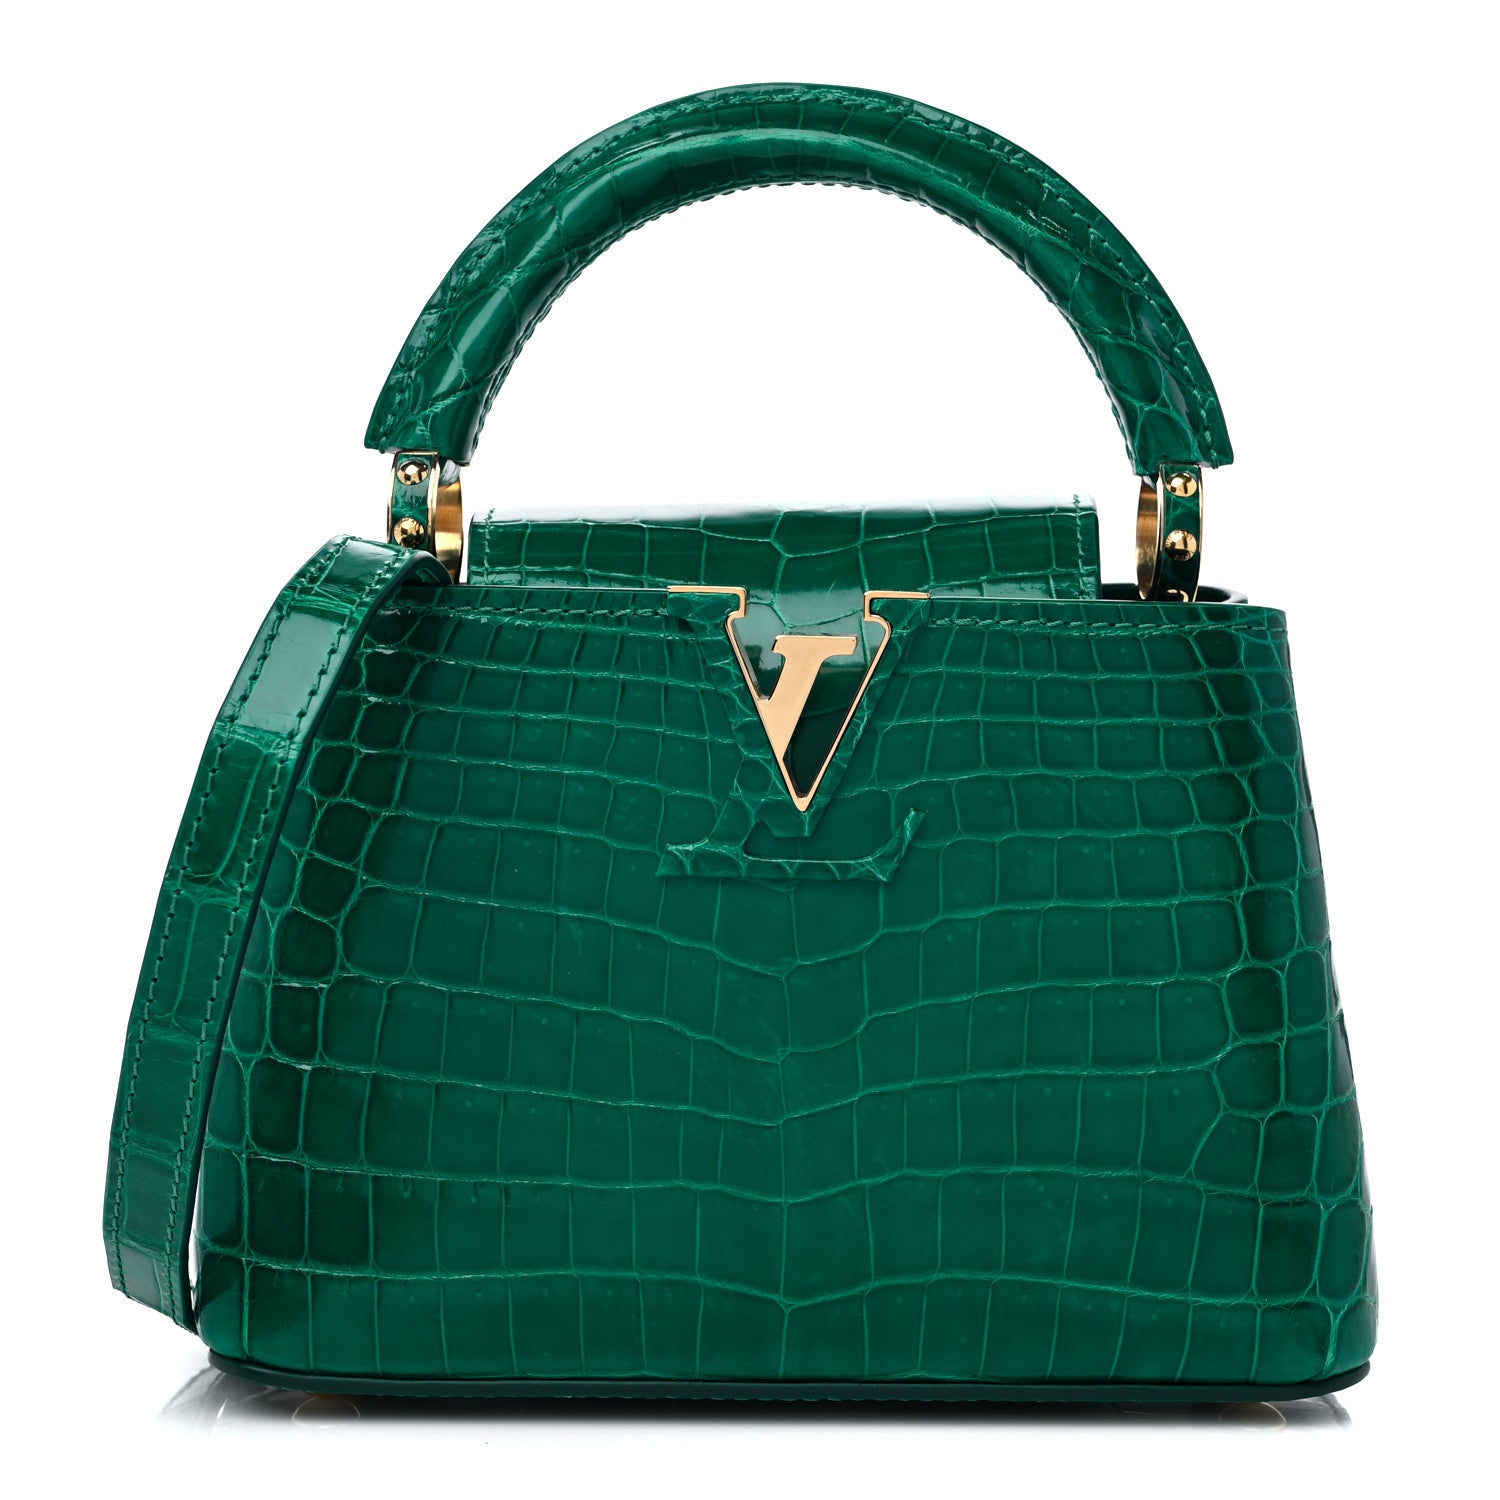 Most Expensive Louis Vuitton Bags himalaya croco emerald